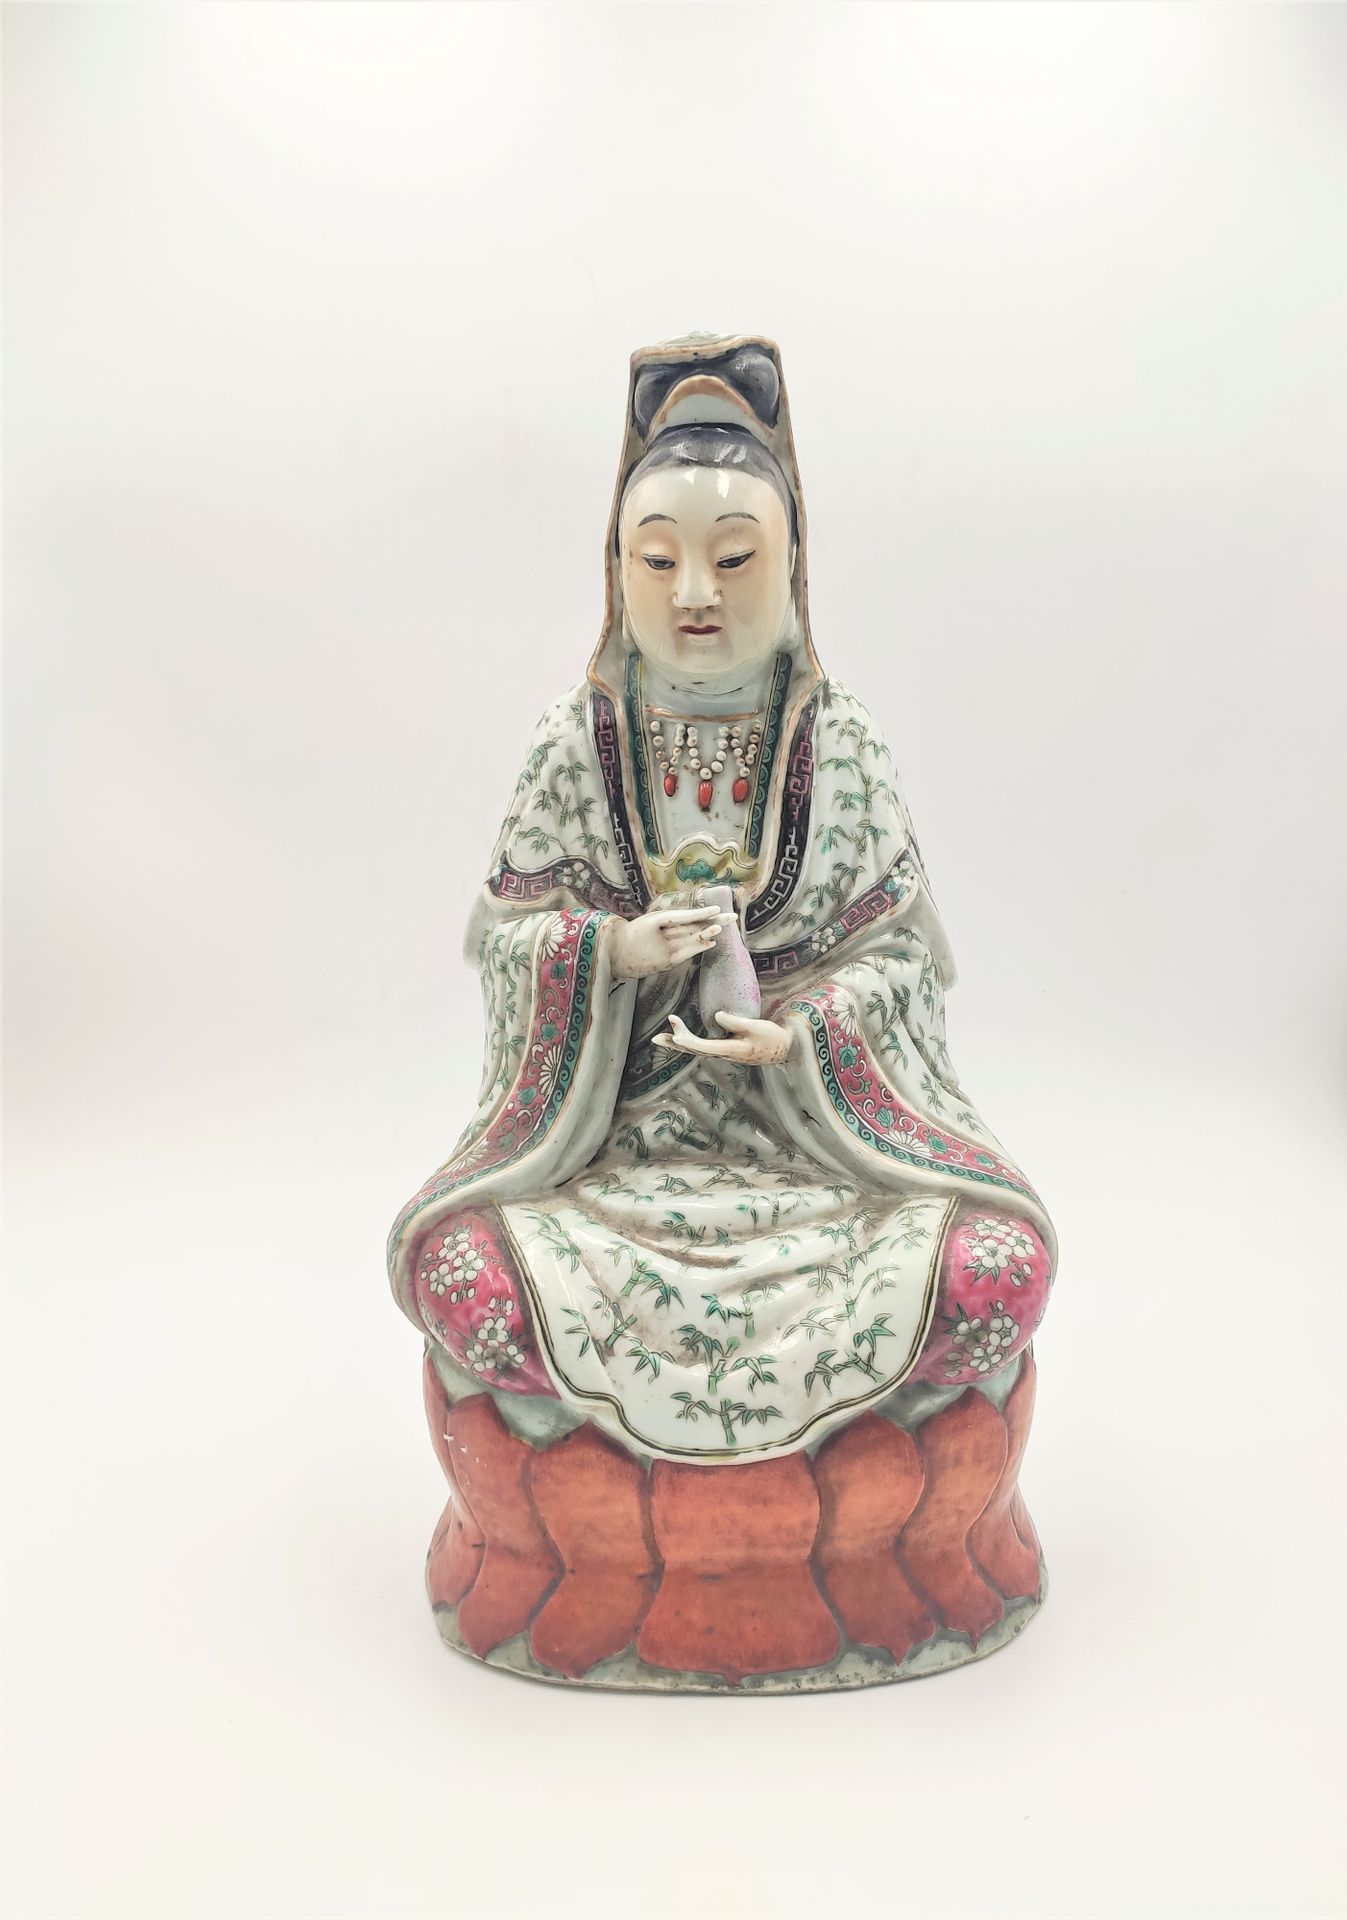 CHINE - XIXe siècle 
Guanyne，瓷器，多色珐琅装饰，手里拿着一个葫芦。中国19世纪。
高度：33厘米